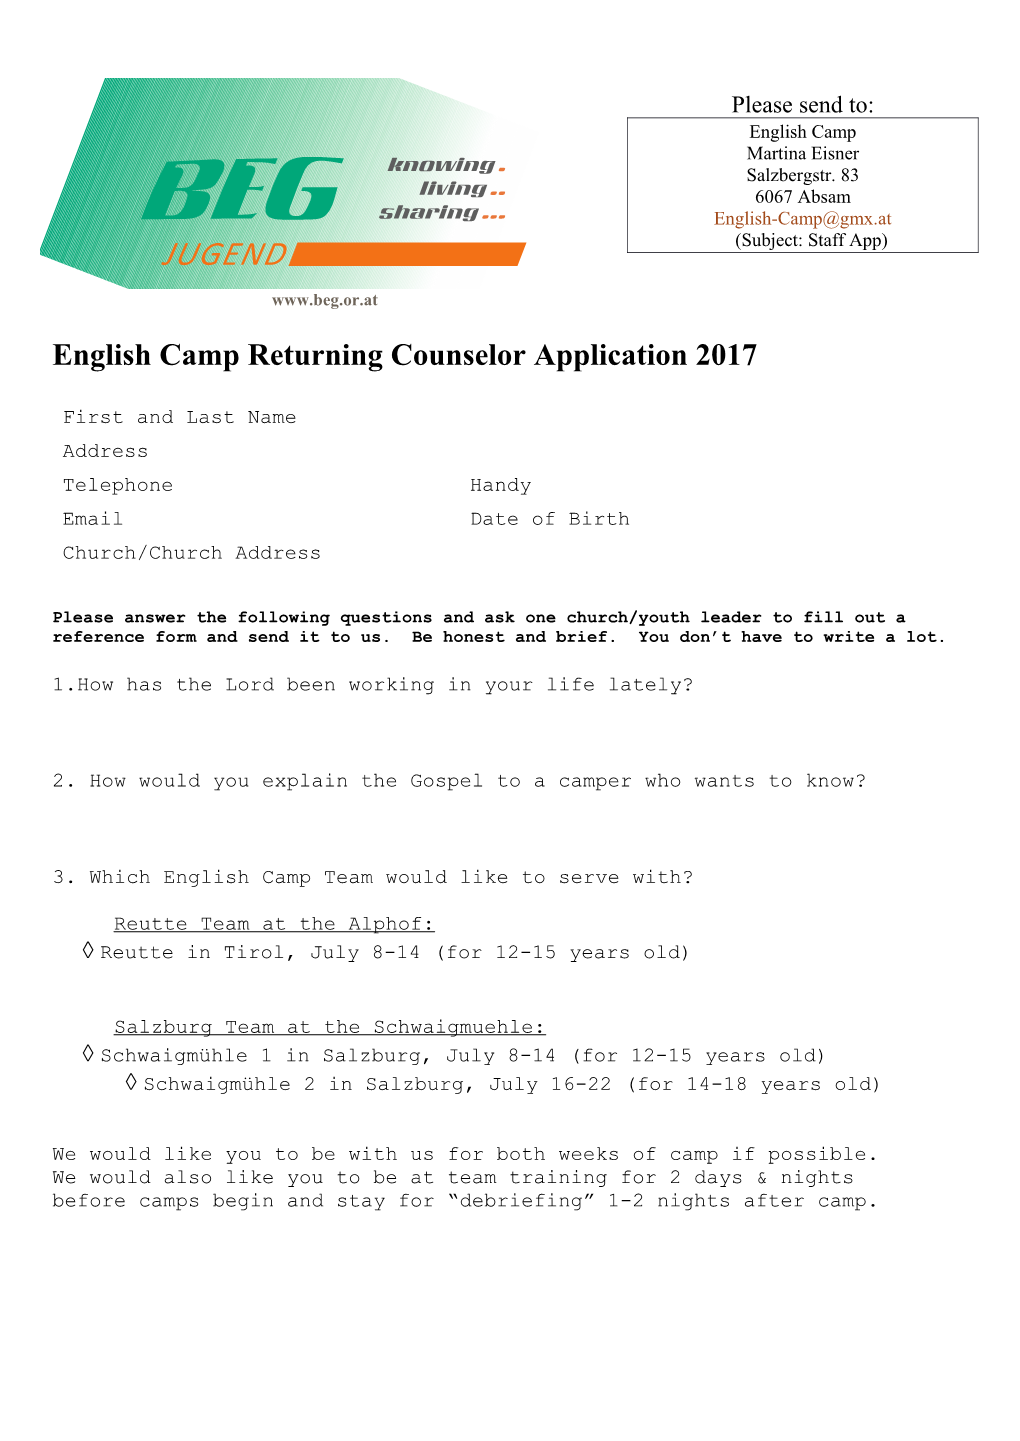 English Camp Austria